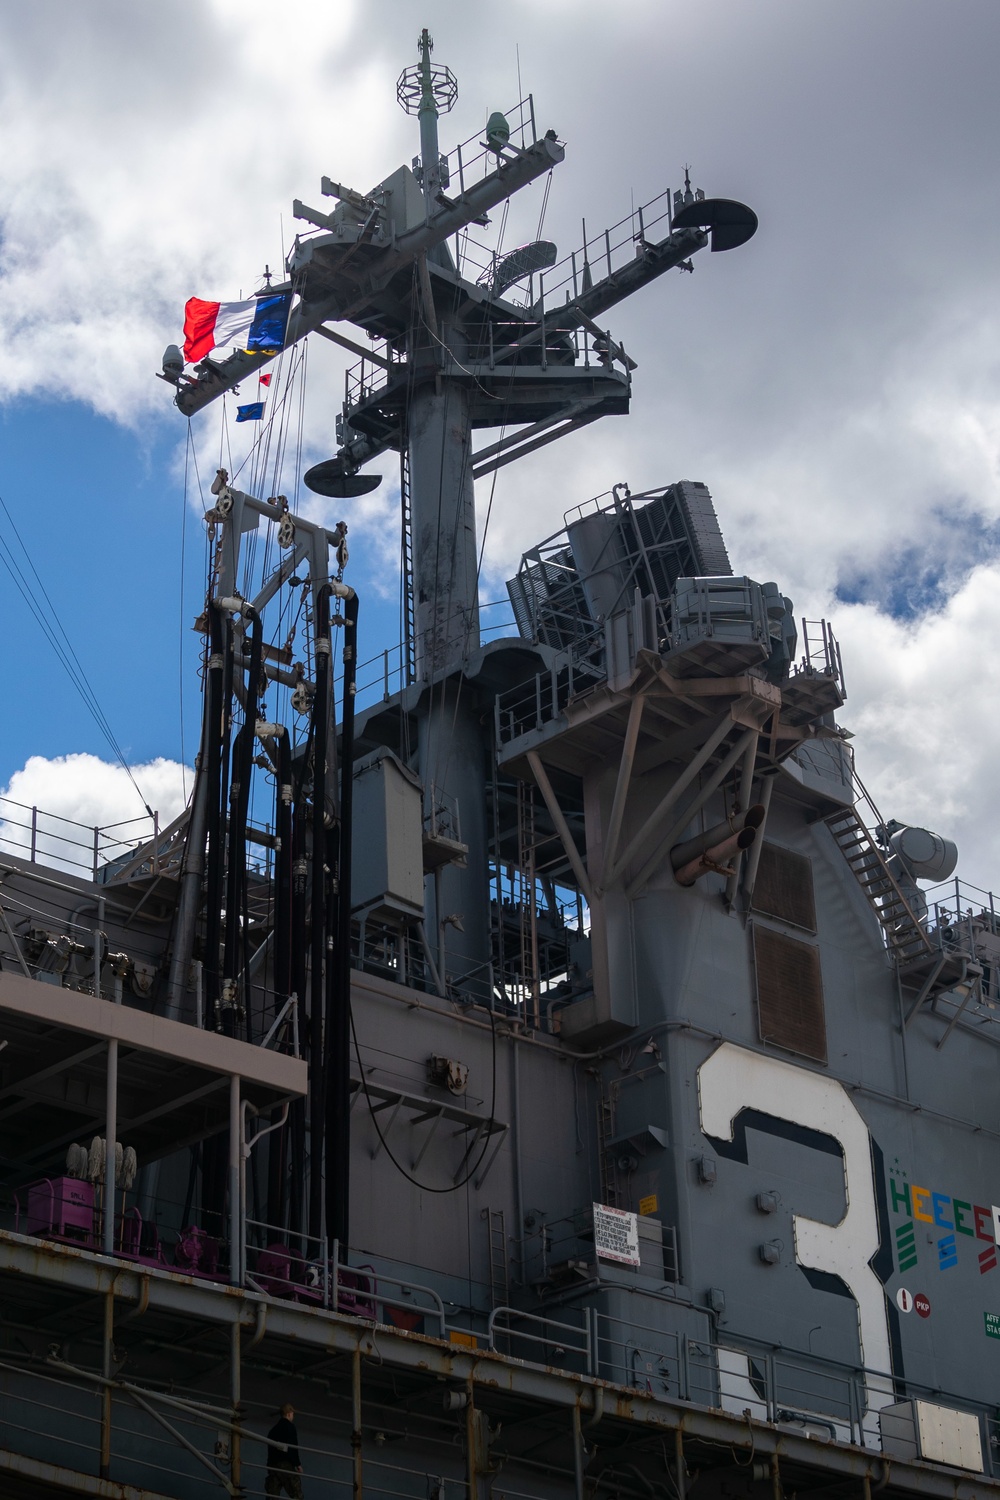 Kearsarge is in Port in Brest, France for Mid-Deployment Voyage Repairs